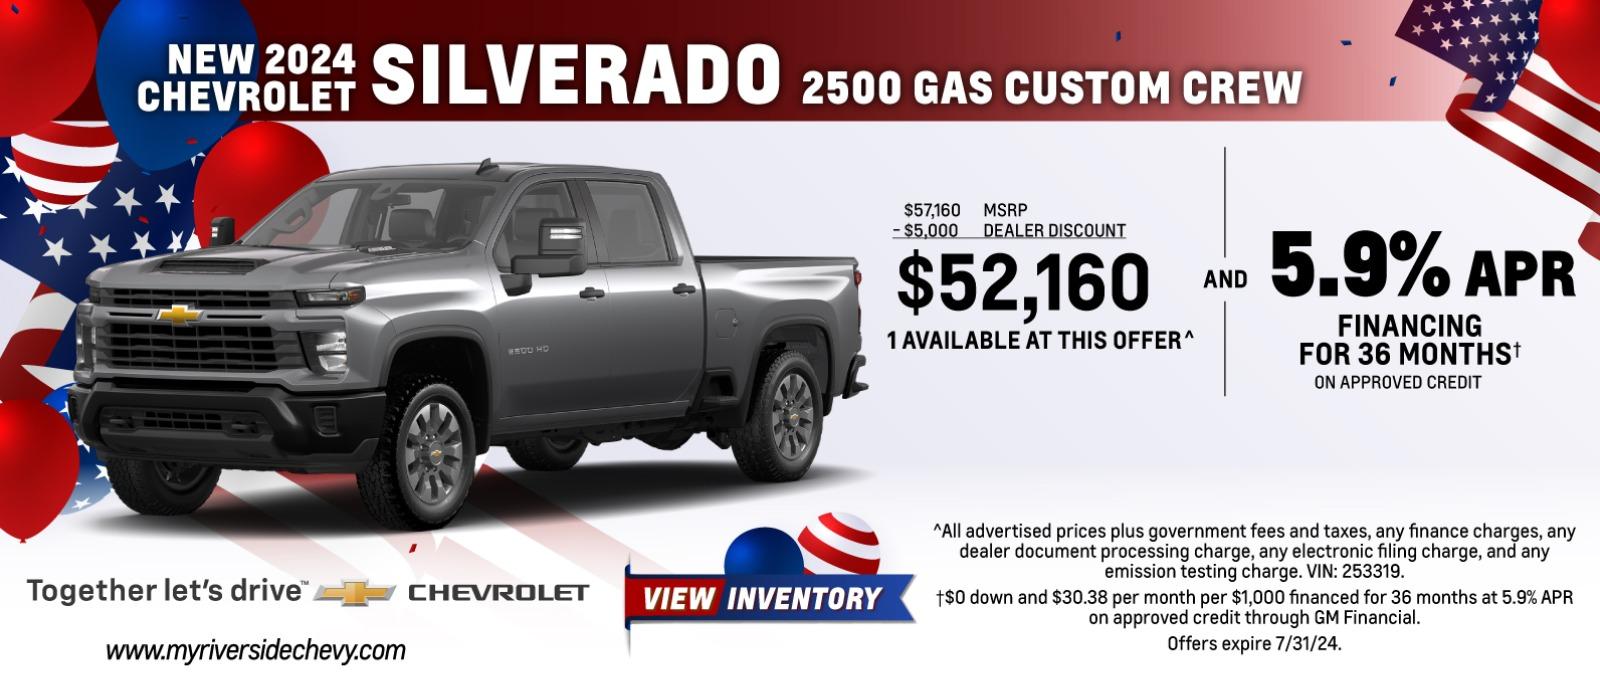 New 2024 Chevy Silverado 2500 Gas Custom